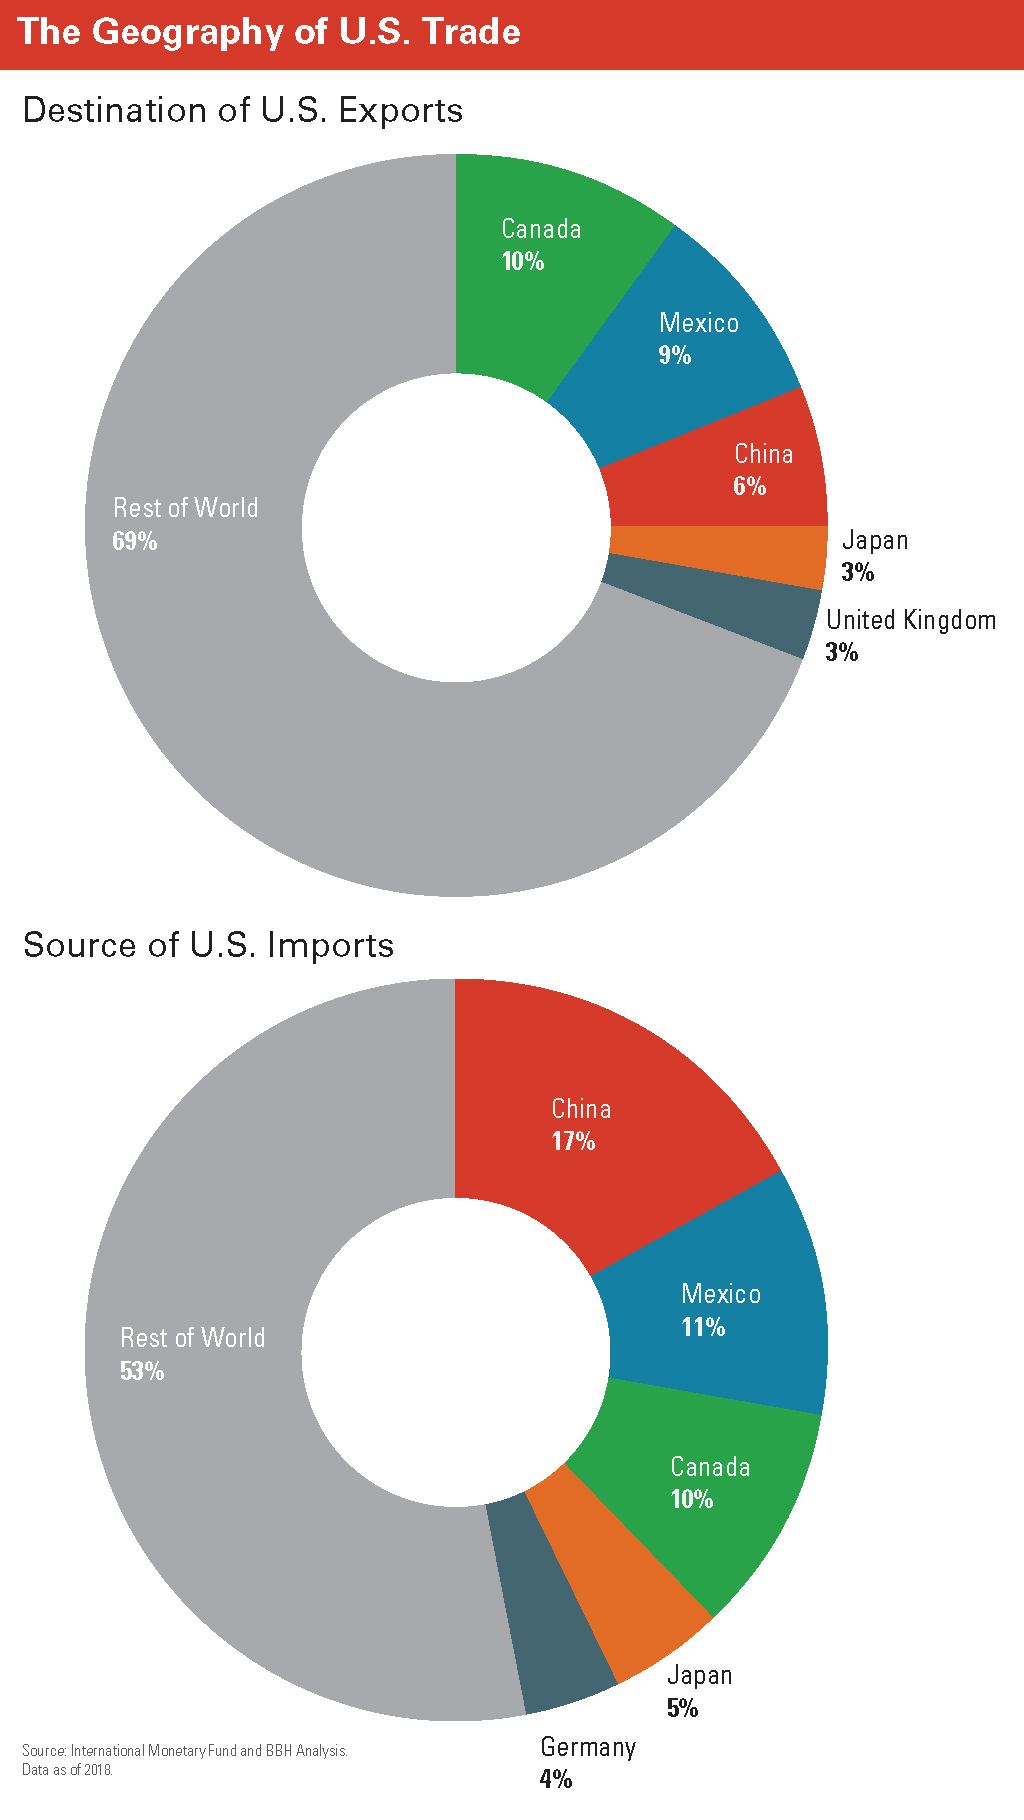 Destination of U.S. Exports: Canada 10%, Mexico 9%, China 6%, Japan 3%, United Kingdom 3$, Rest of World 69%. Source of U.S. Imports: China 17%, Mexico 11%, Canada 10%, Japan 5%, Germany 4%, Rest of World 53%